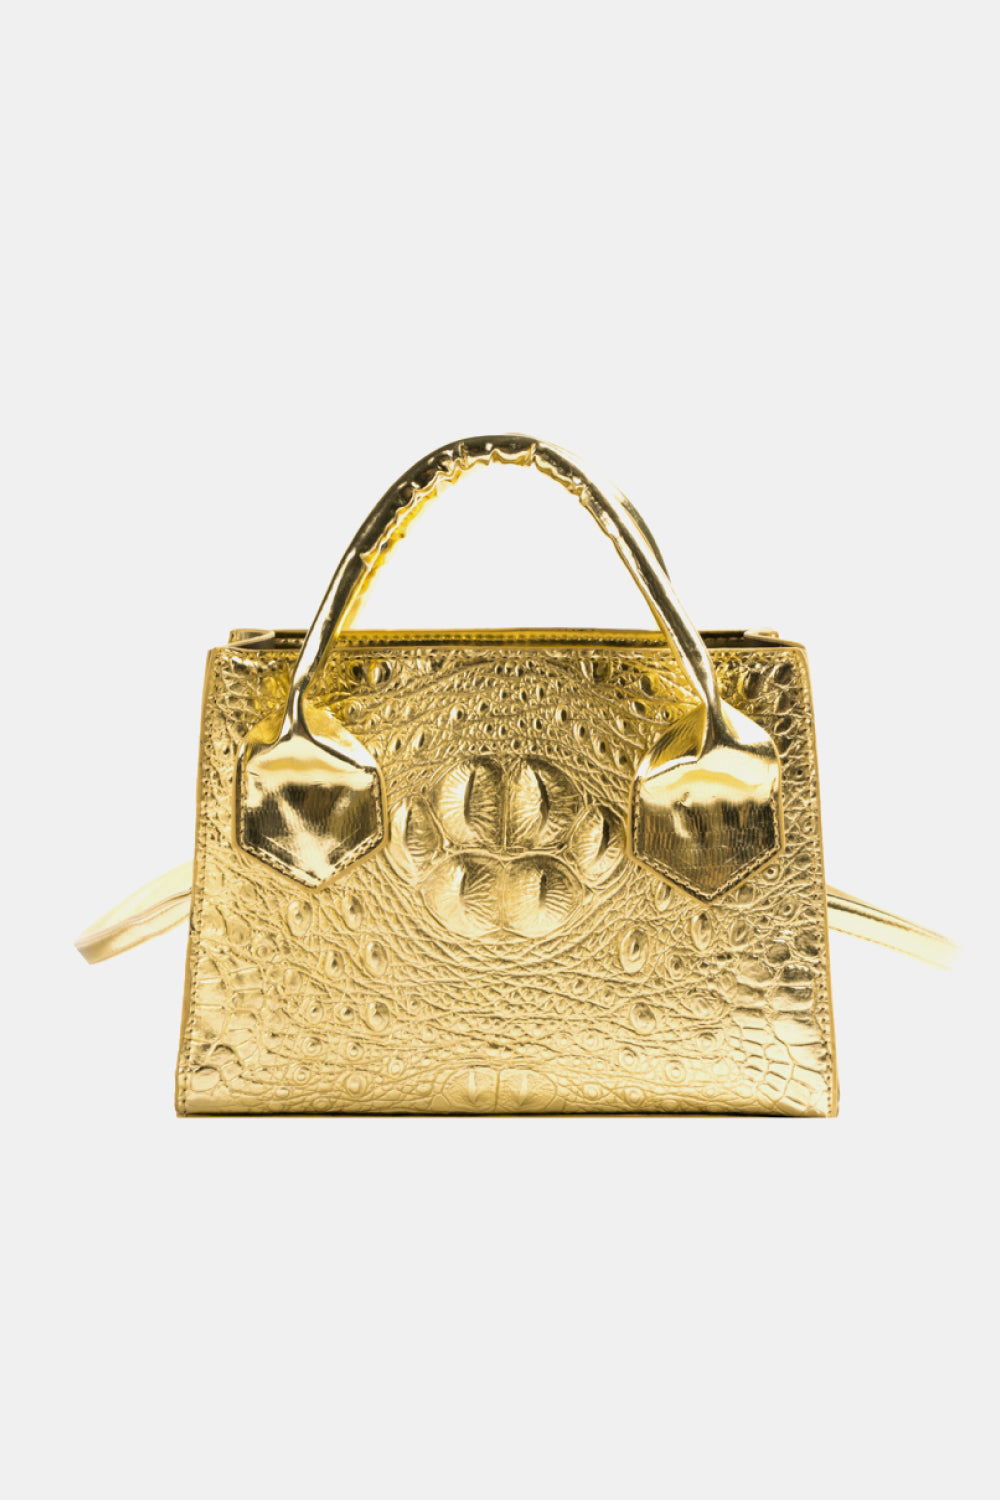 Textured PU Leather Crossbody Gold Bag